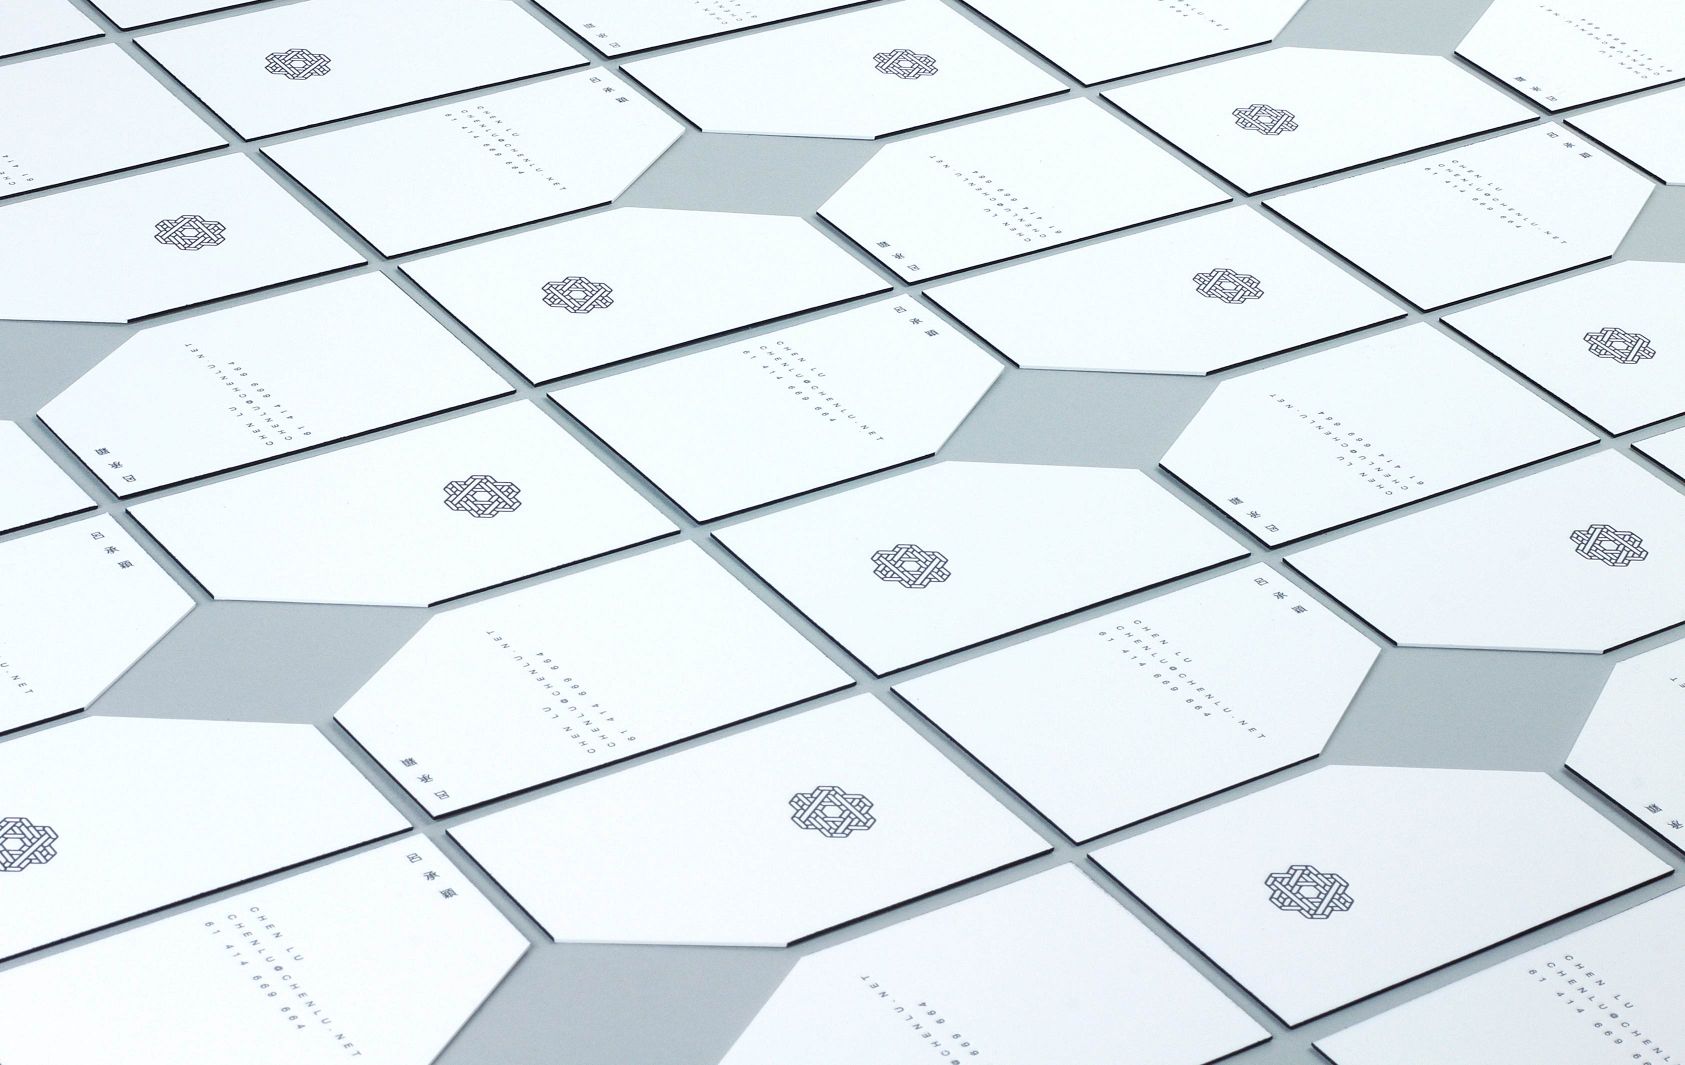 letterpress-Chen-lu-business-cards-design-by-toko-edge-paint